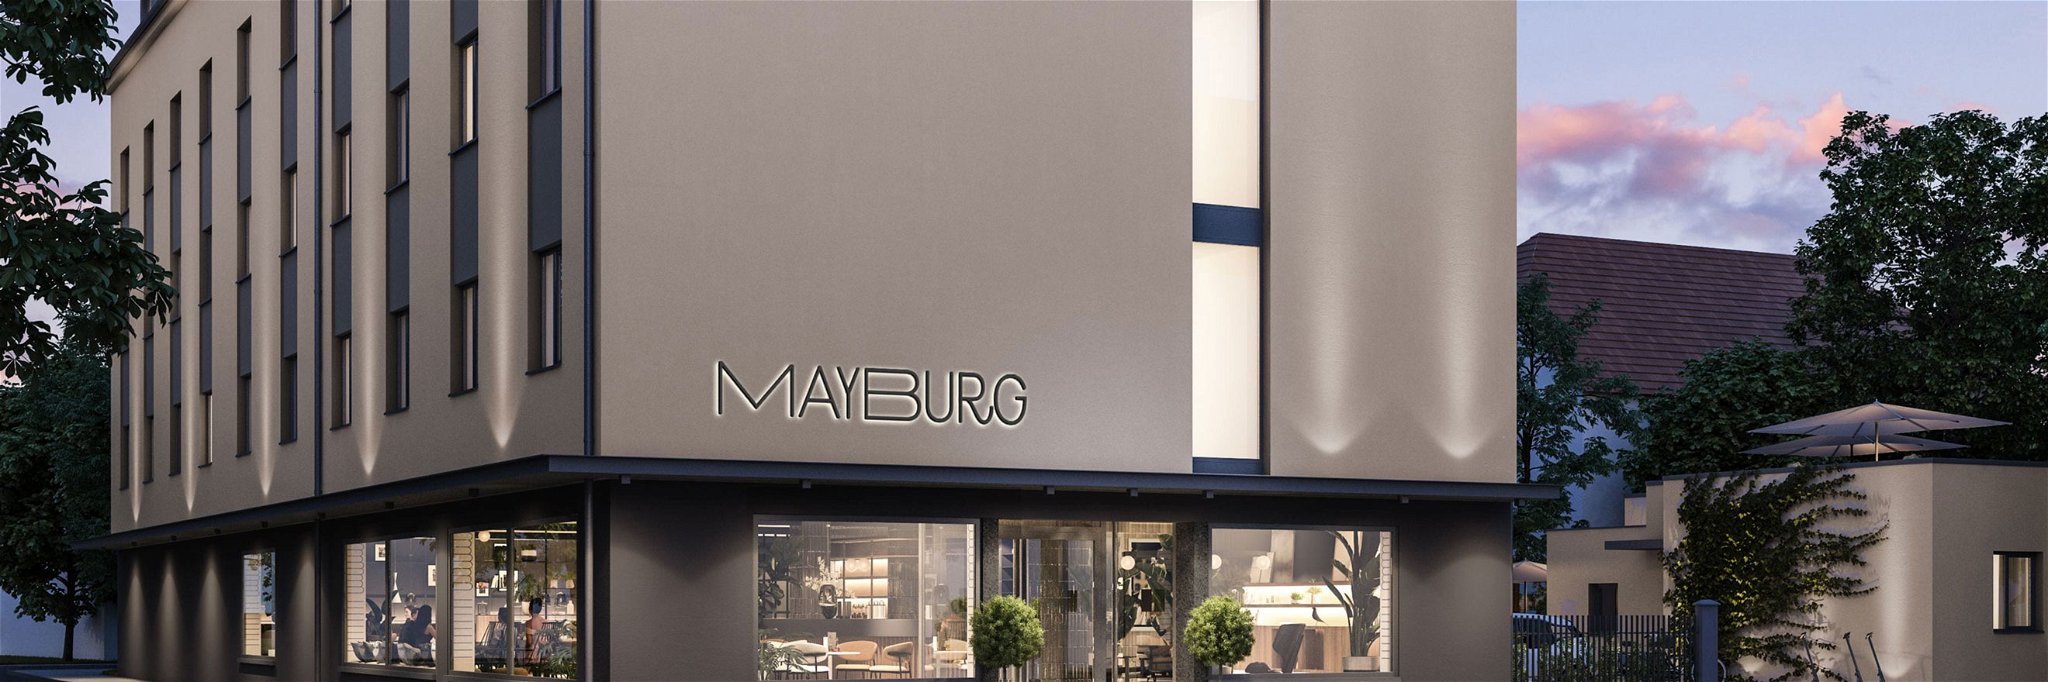 The Mayburg Salzburg will open soon.